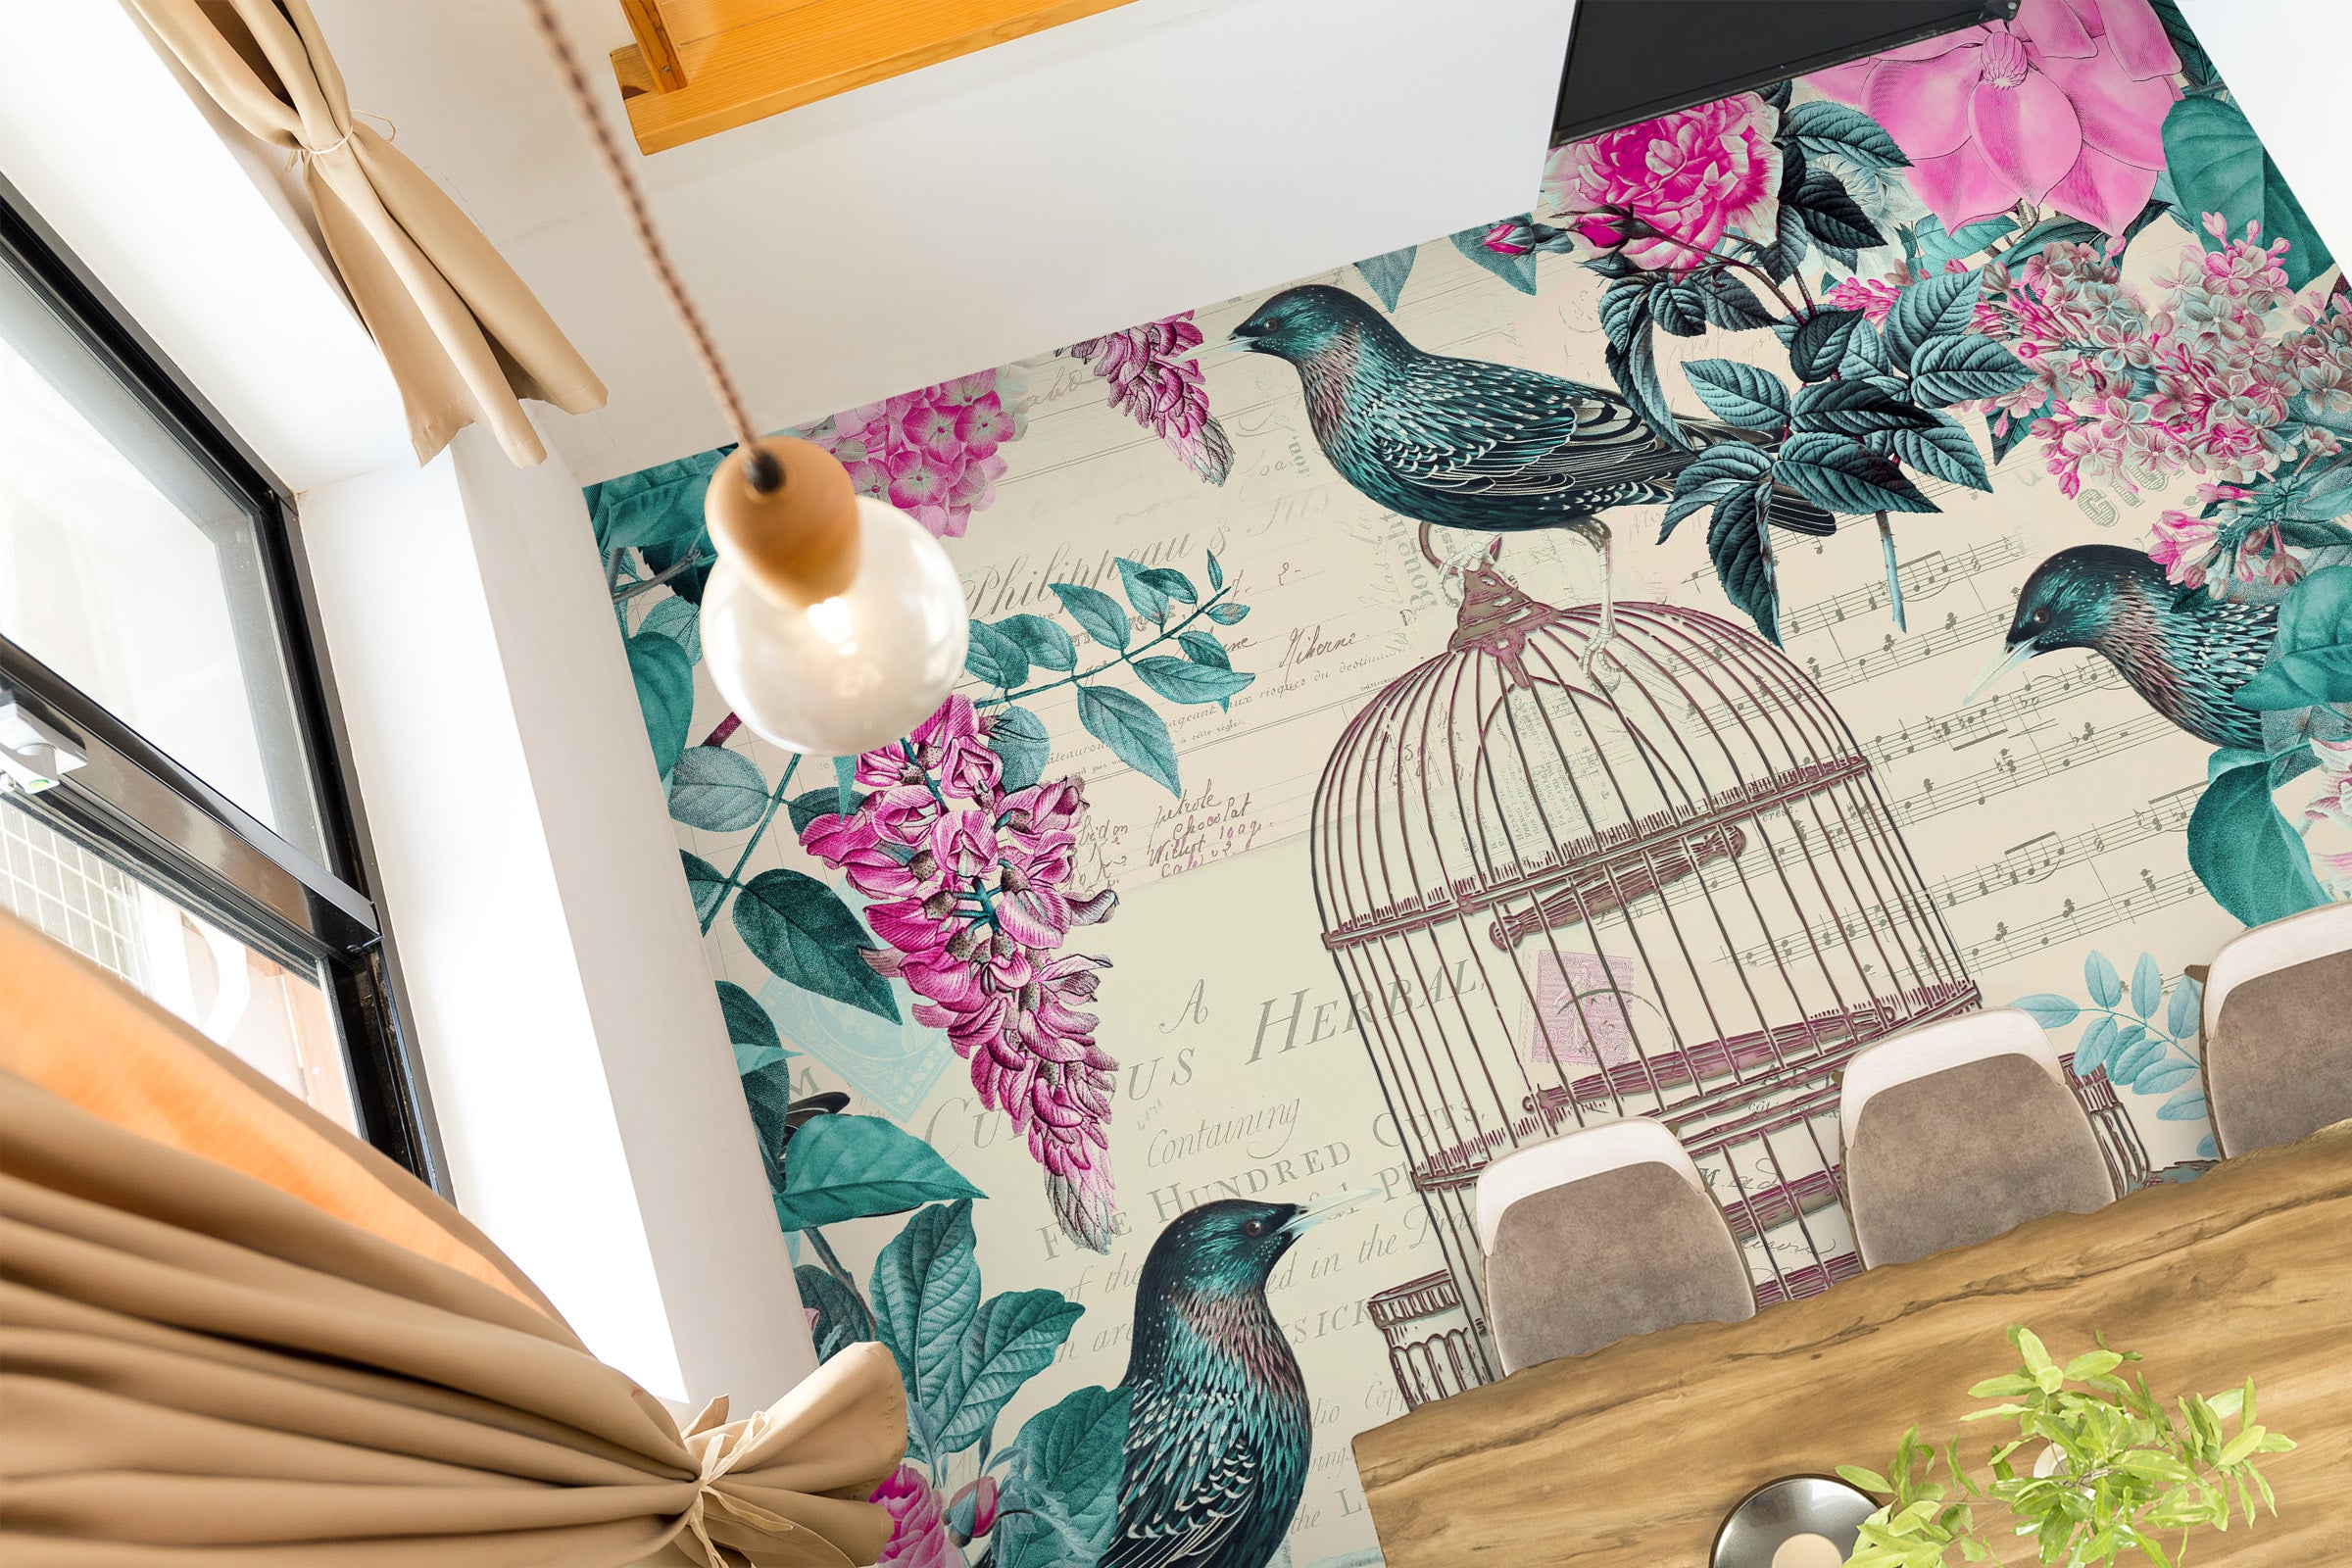 3D Birdcage Bird Flower Bush 140133 Andrea Haase Floor Mural  Wallpaper Murals Self-Adhesive Removable Print Epoxy